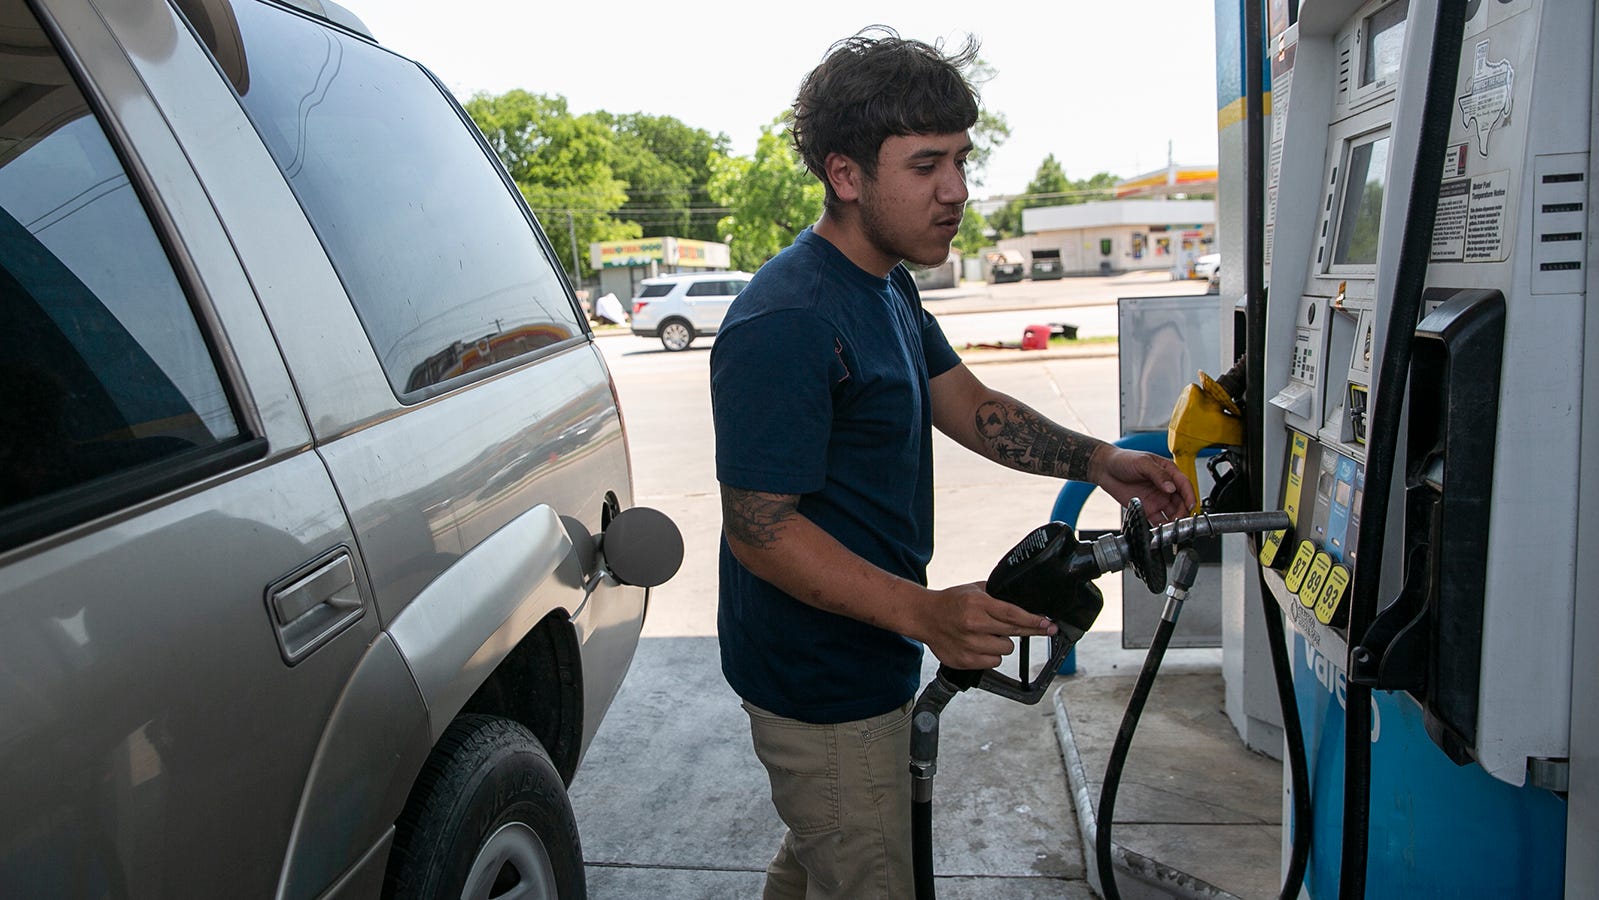 austin-gas-prices-drop-10-cents-per-gallon-for-now